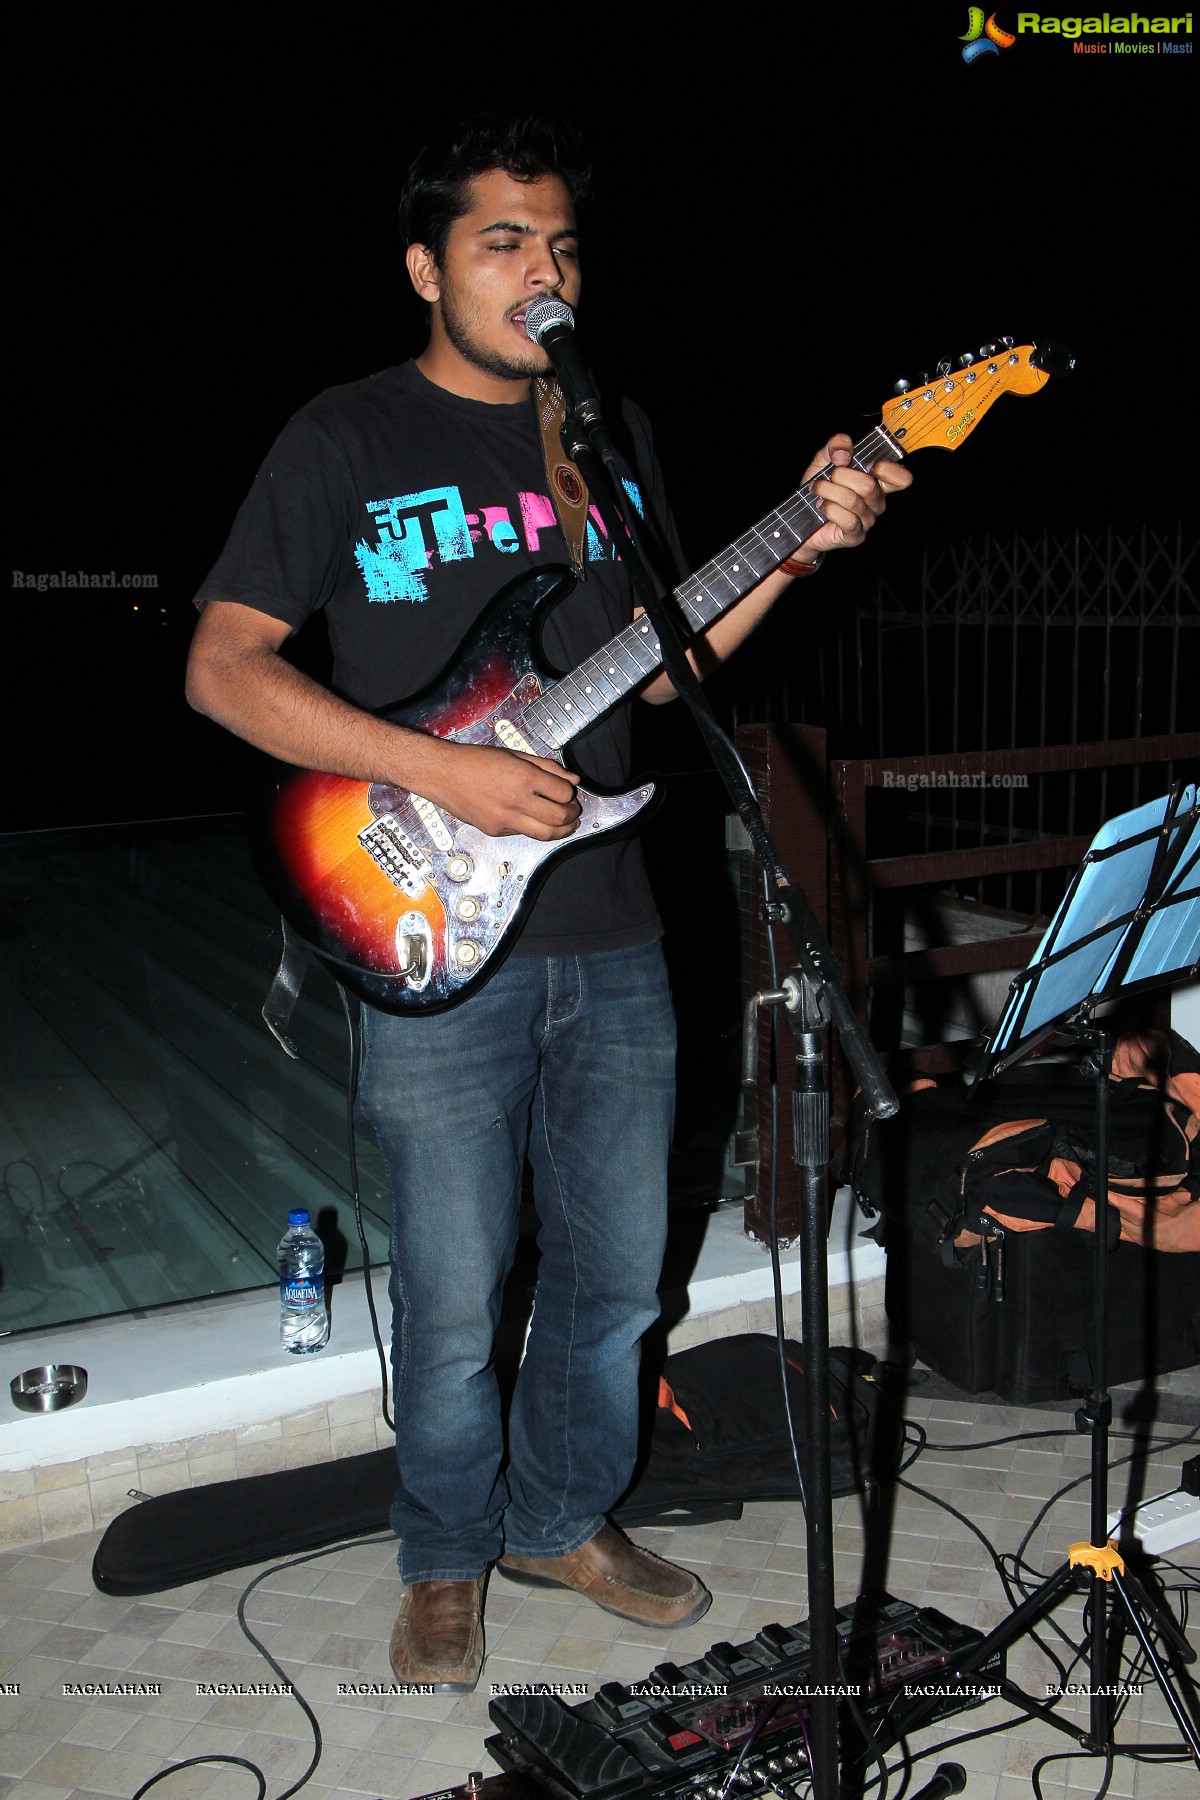 Live Music By Sivasankar Menon at The Urban Grill, Hyderabad